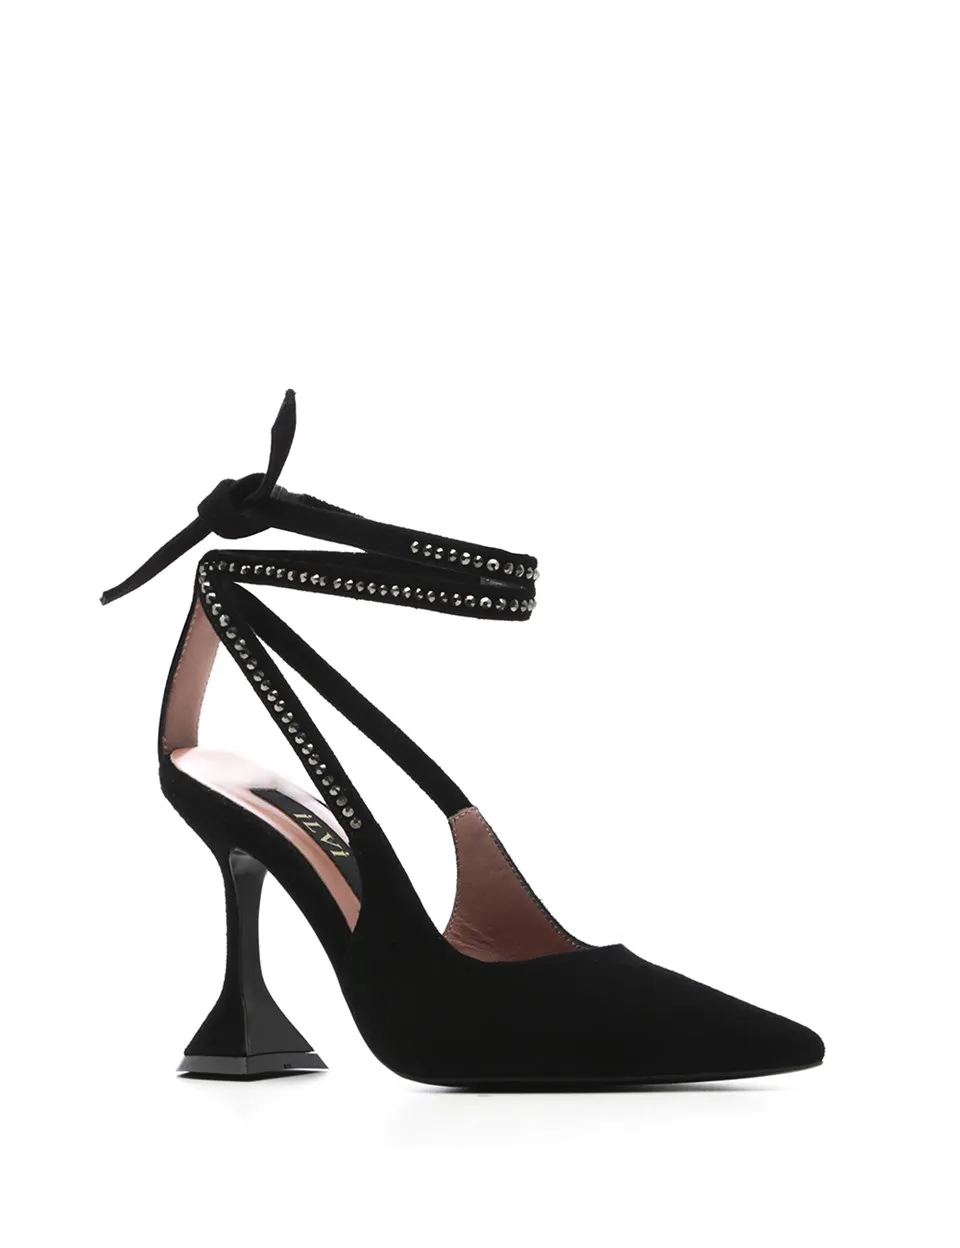 

ILVi-Genuine Leather Handmade Riga Women's Heeled Sandal Black Suede Women Shoes 2020 Spring Summer (Made in Turkey)